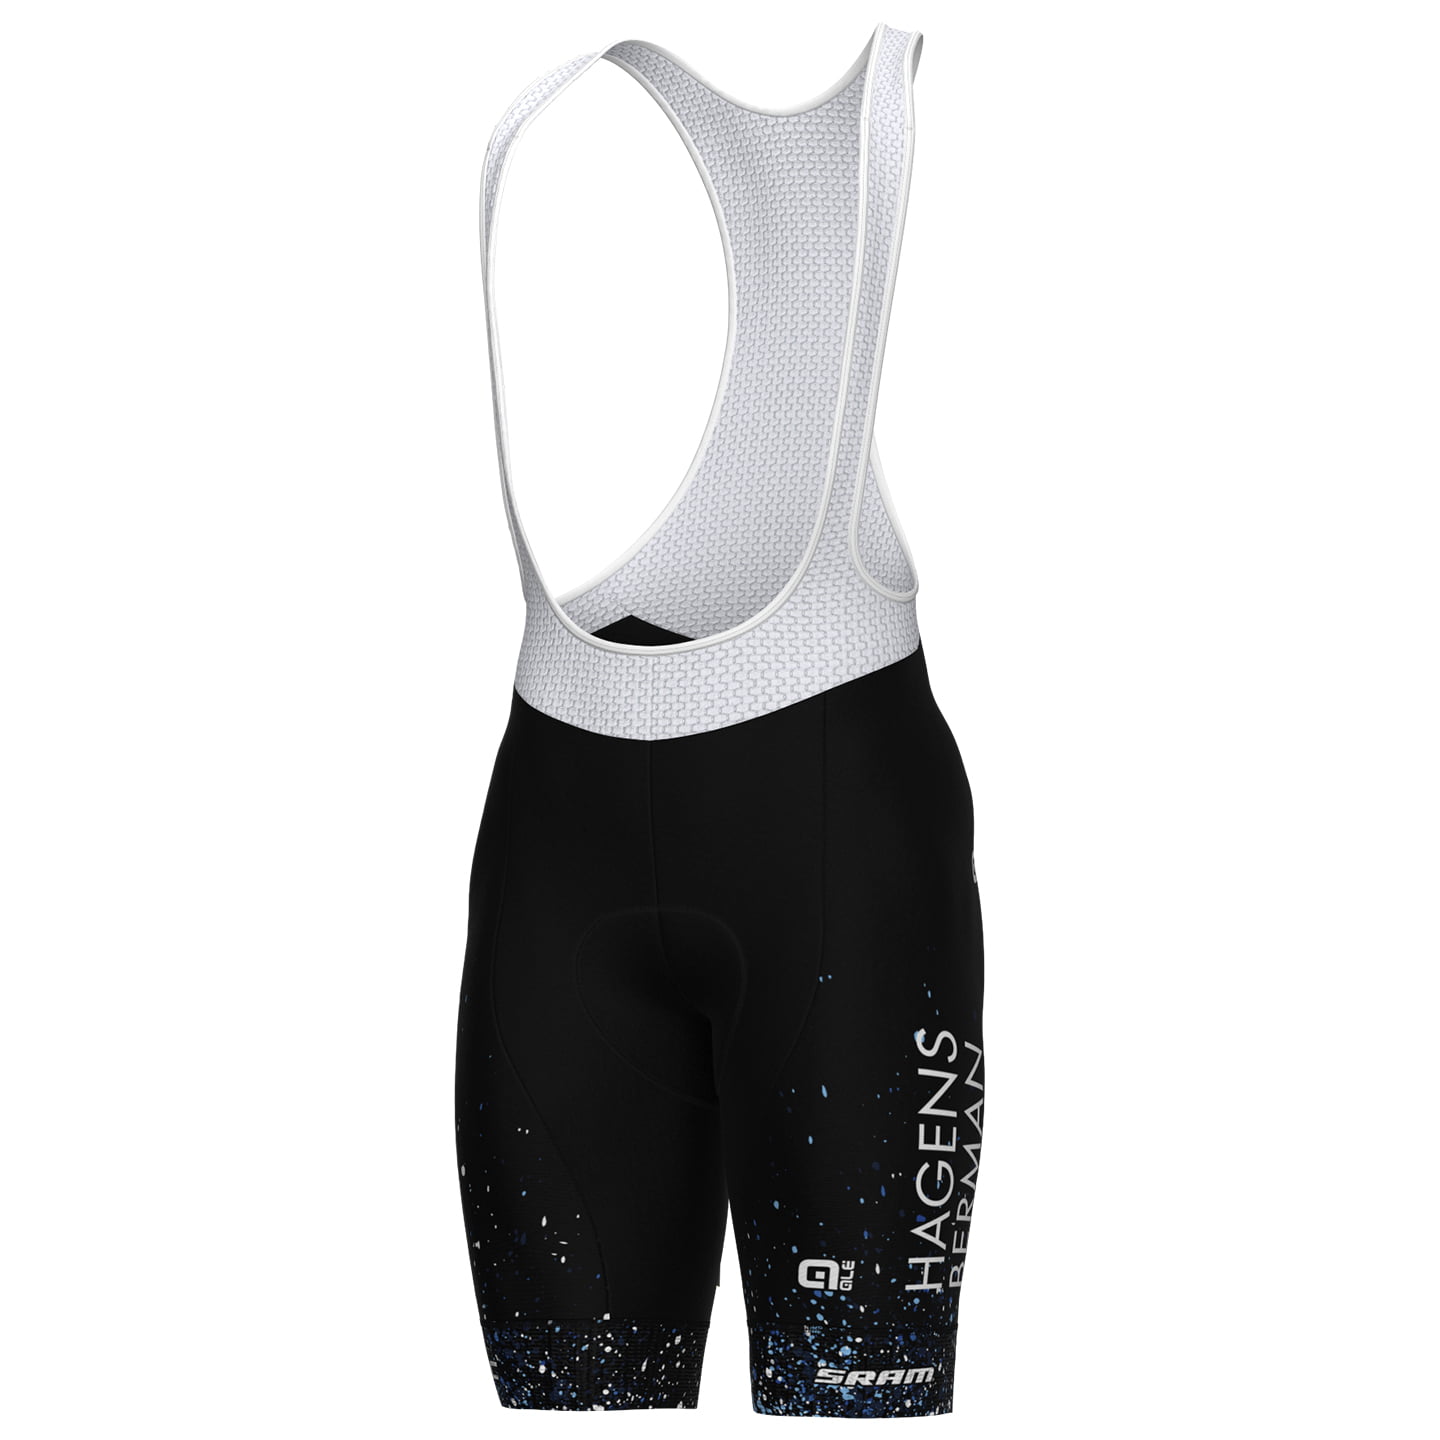 HAGENS BERMAN AXEON 2023 Bib Shorts, for men, size S, Cycle shorts, Cycling clothing